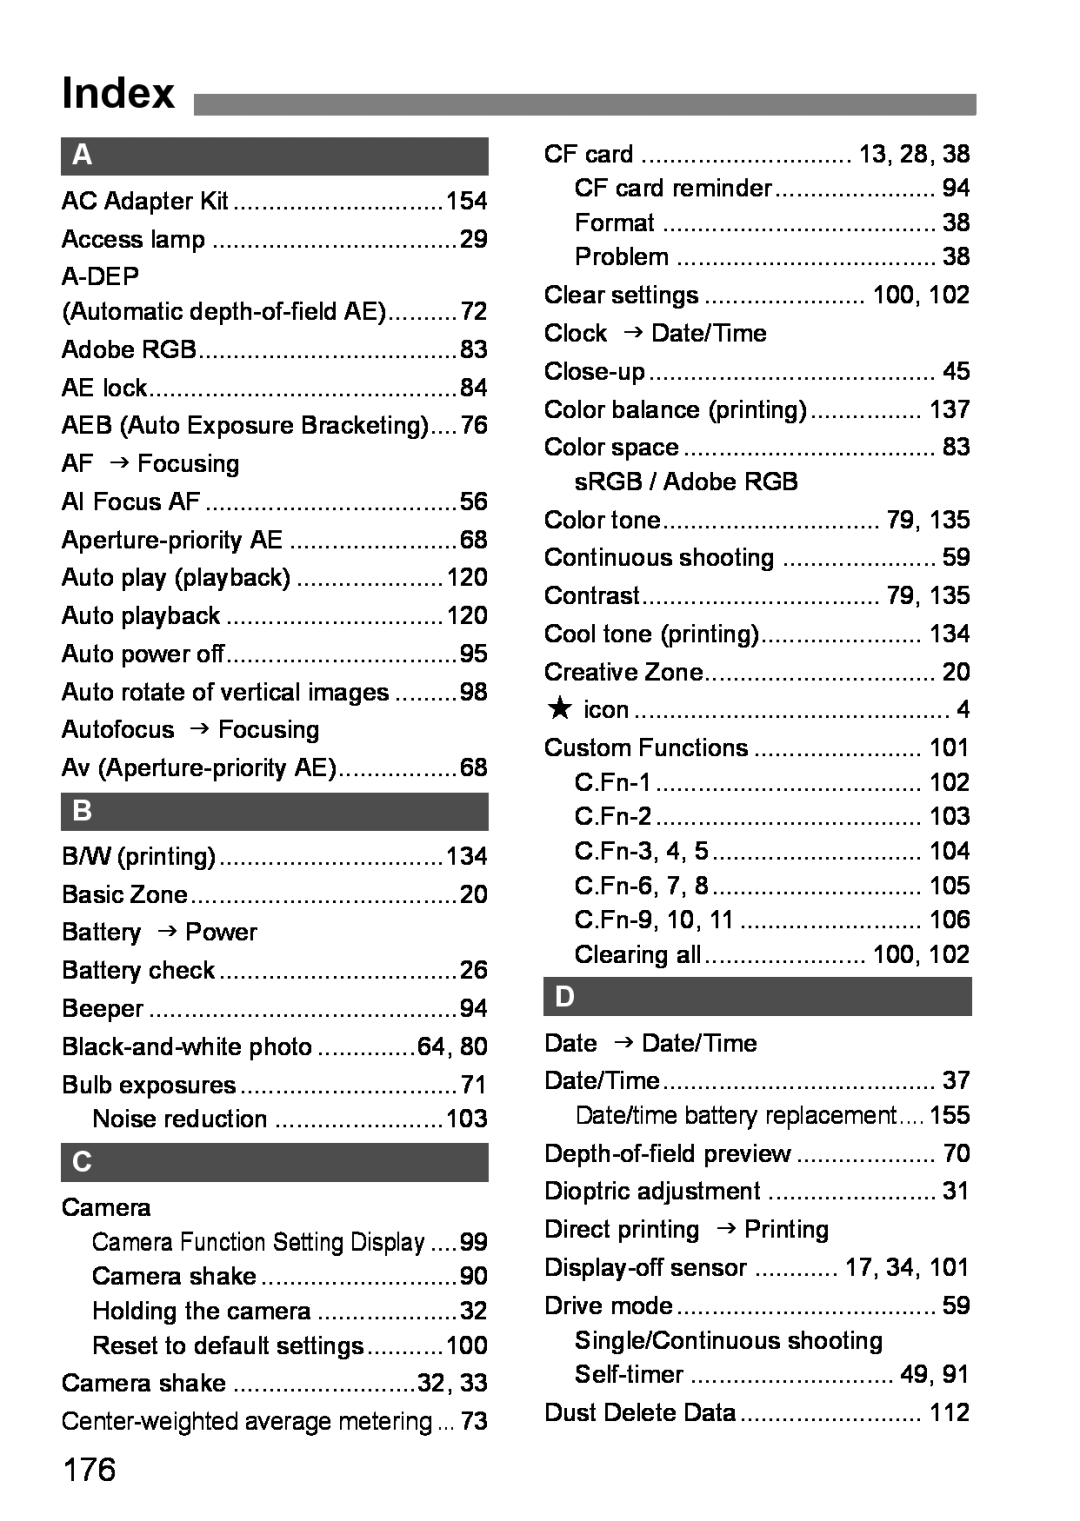 Canon EOS DIGITAL REBEL XTI instruction manual Index 